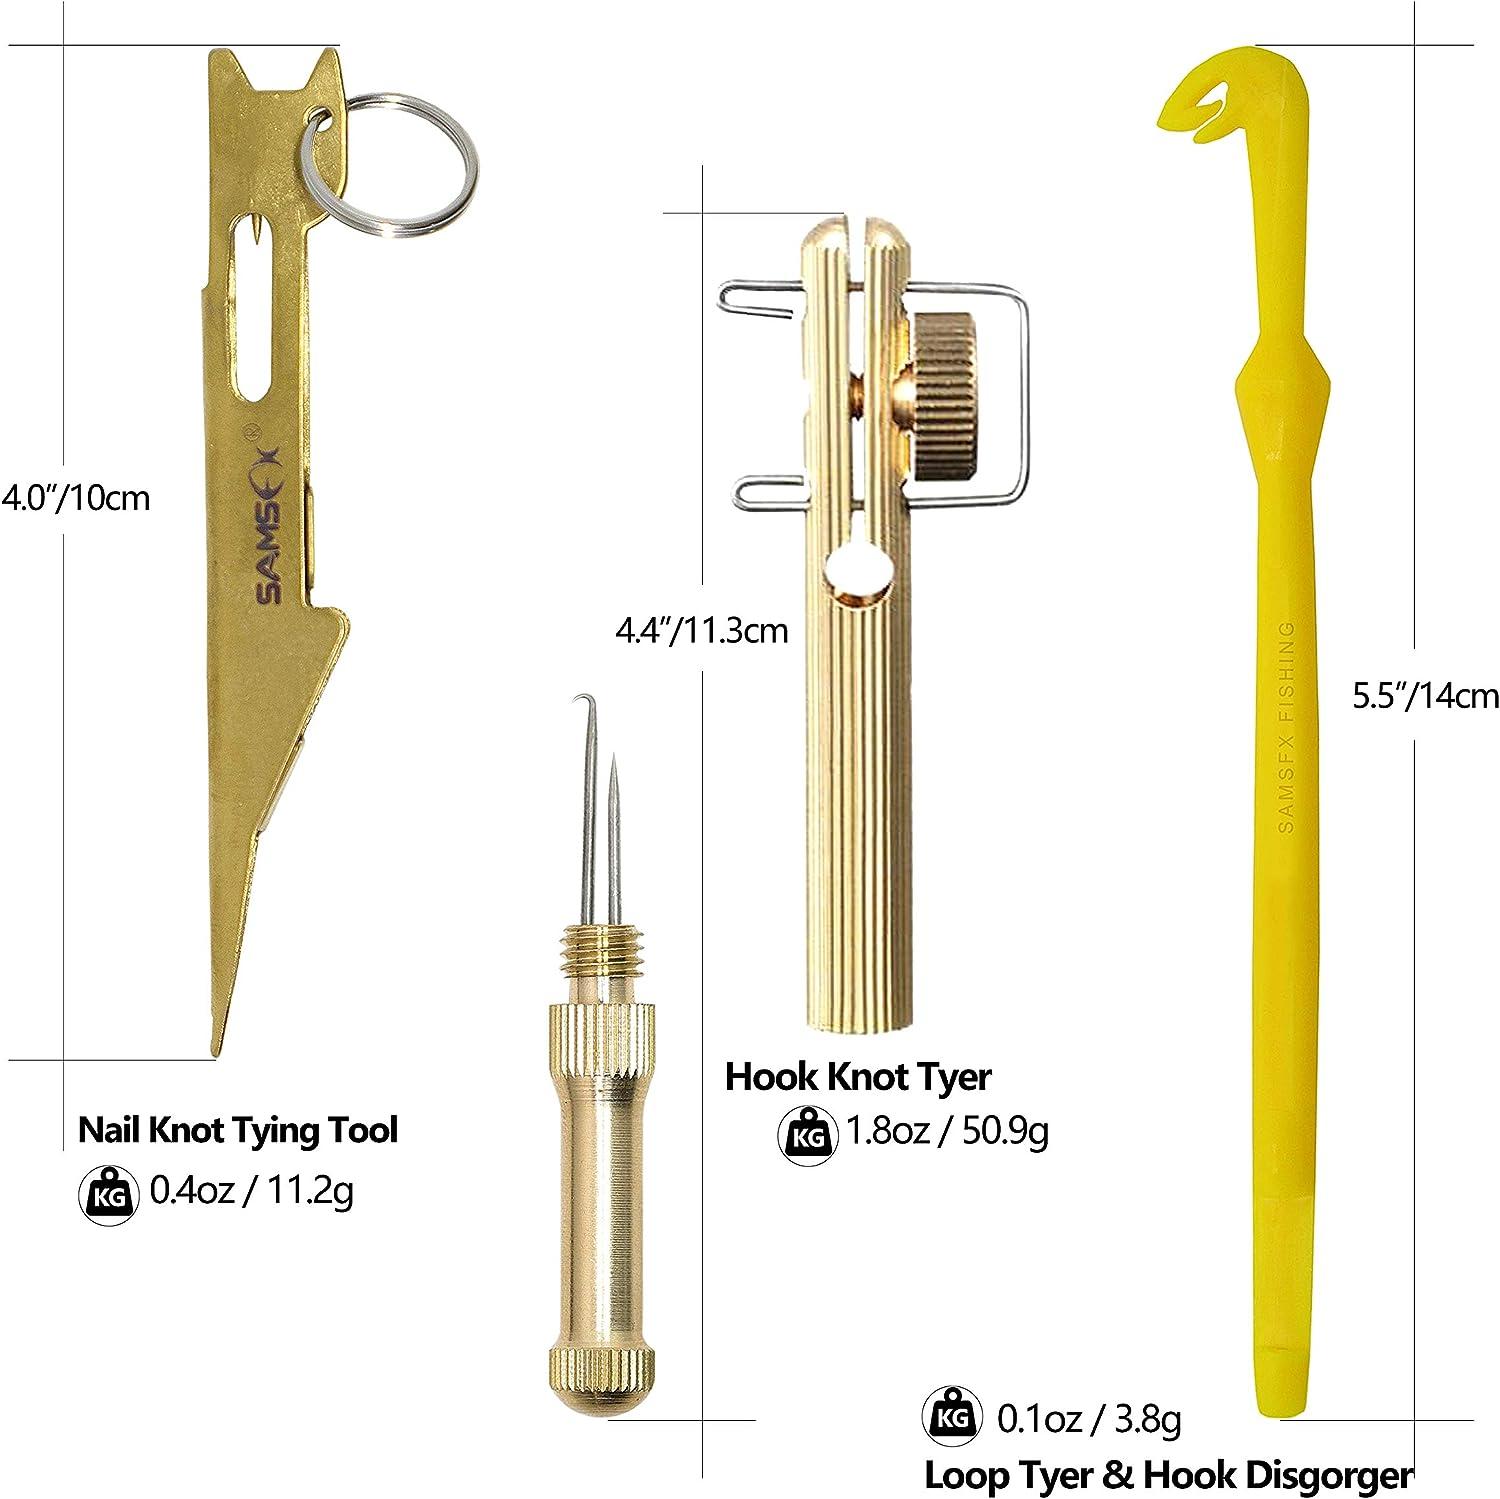  SAMSFX Fishing Pliers, Muti-Function Fly Fishing Tools